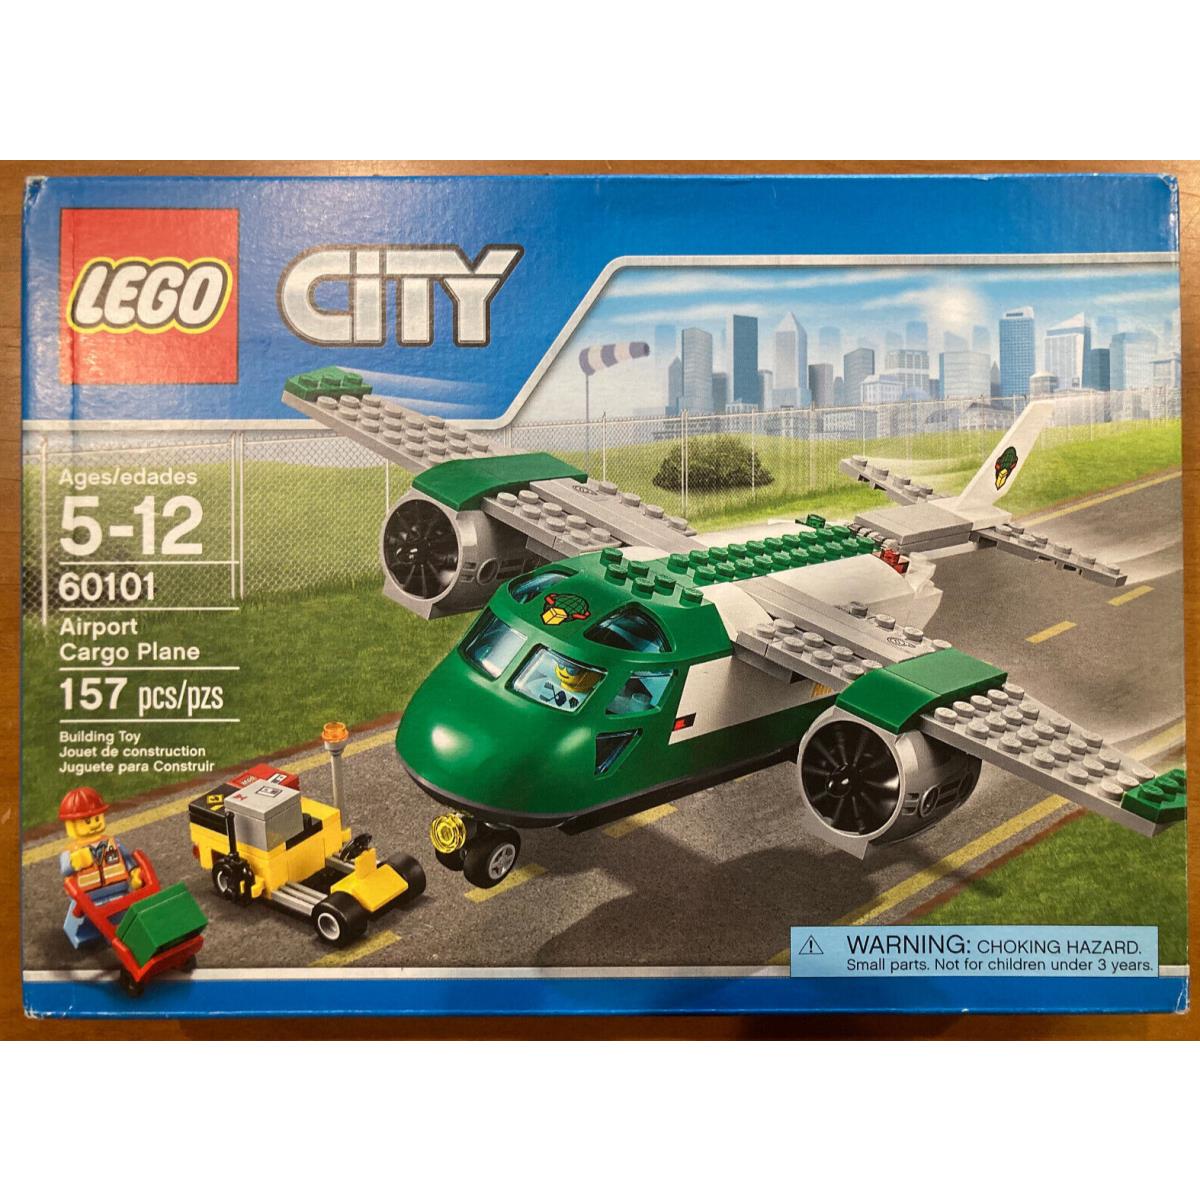 Lego City: Airport Cargo Plane 60101 - Box Wear